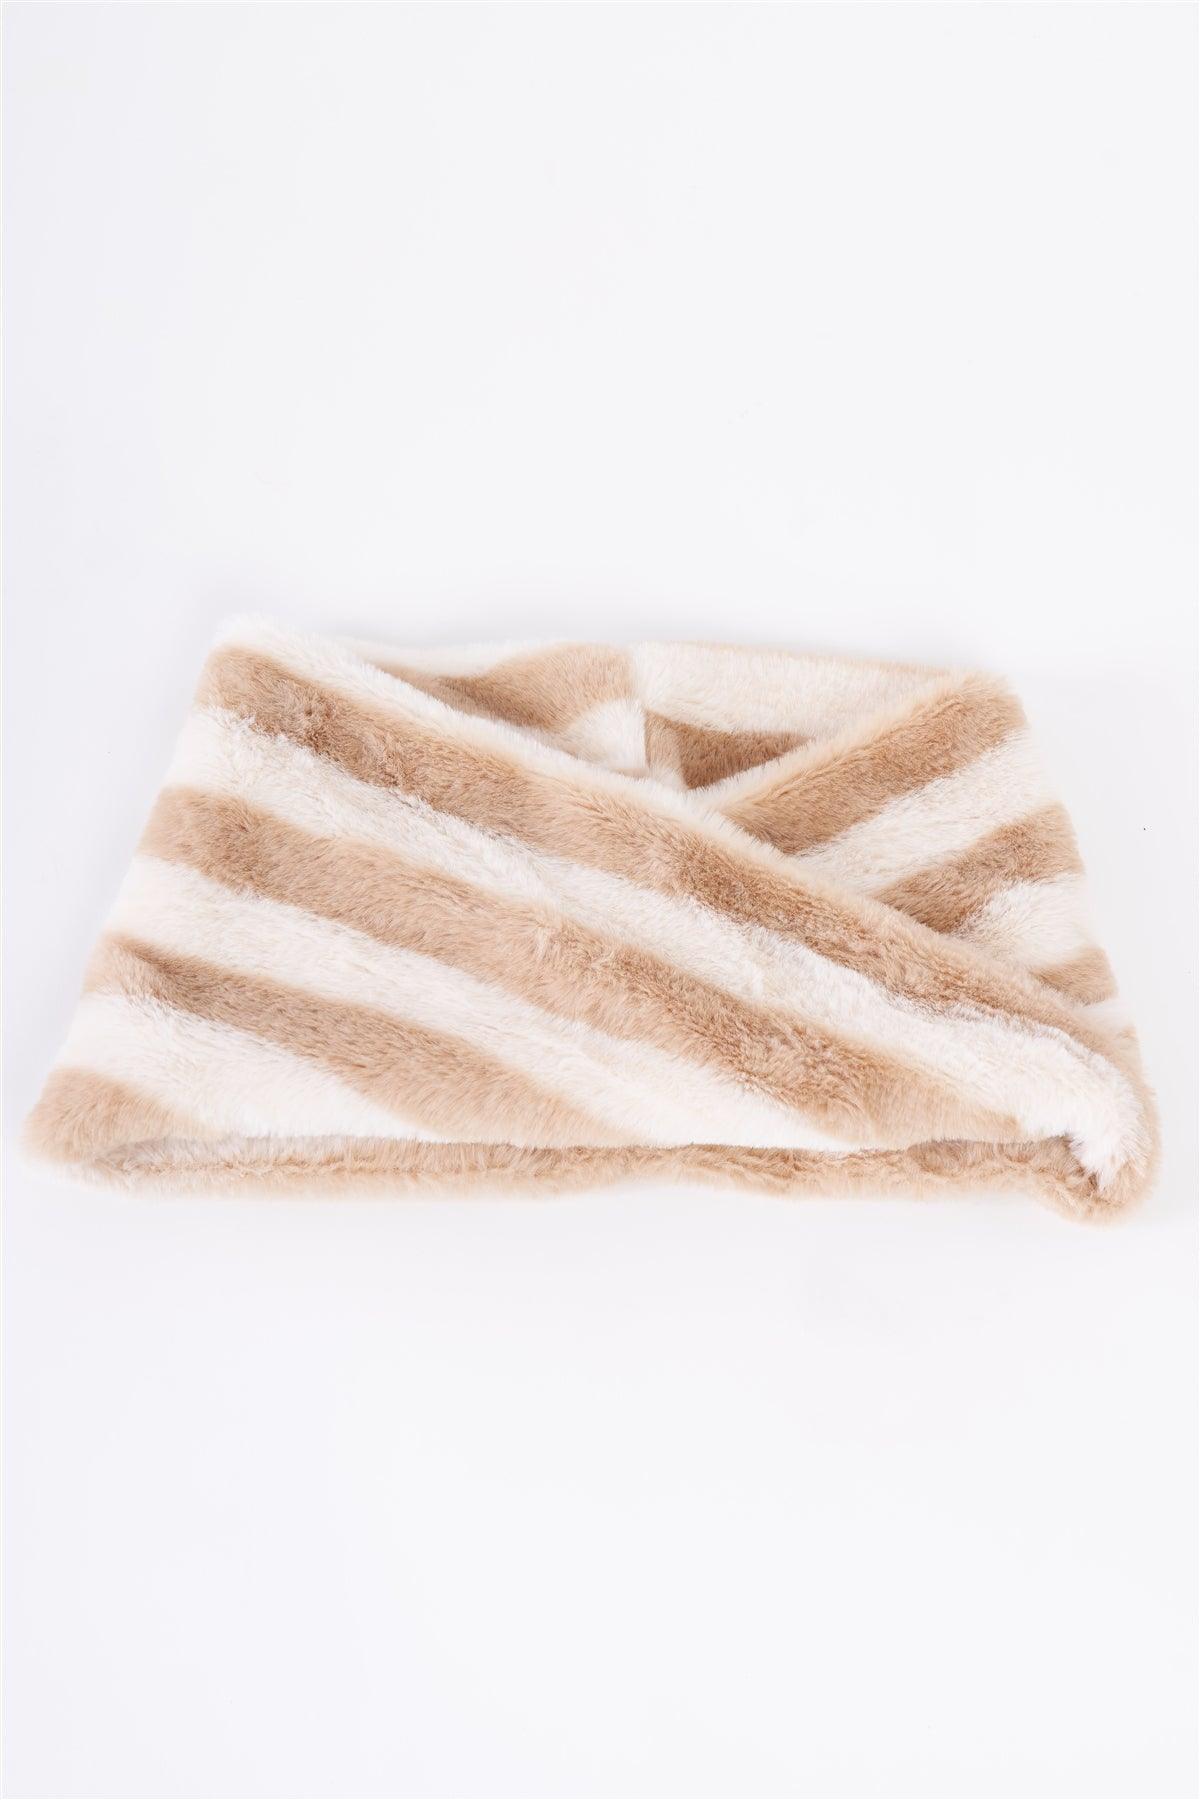 Ivory Striped Fuzzy Faux Fur Twisted Infinity Scarf /3 Pieces